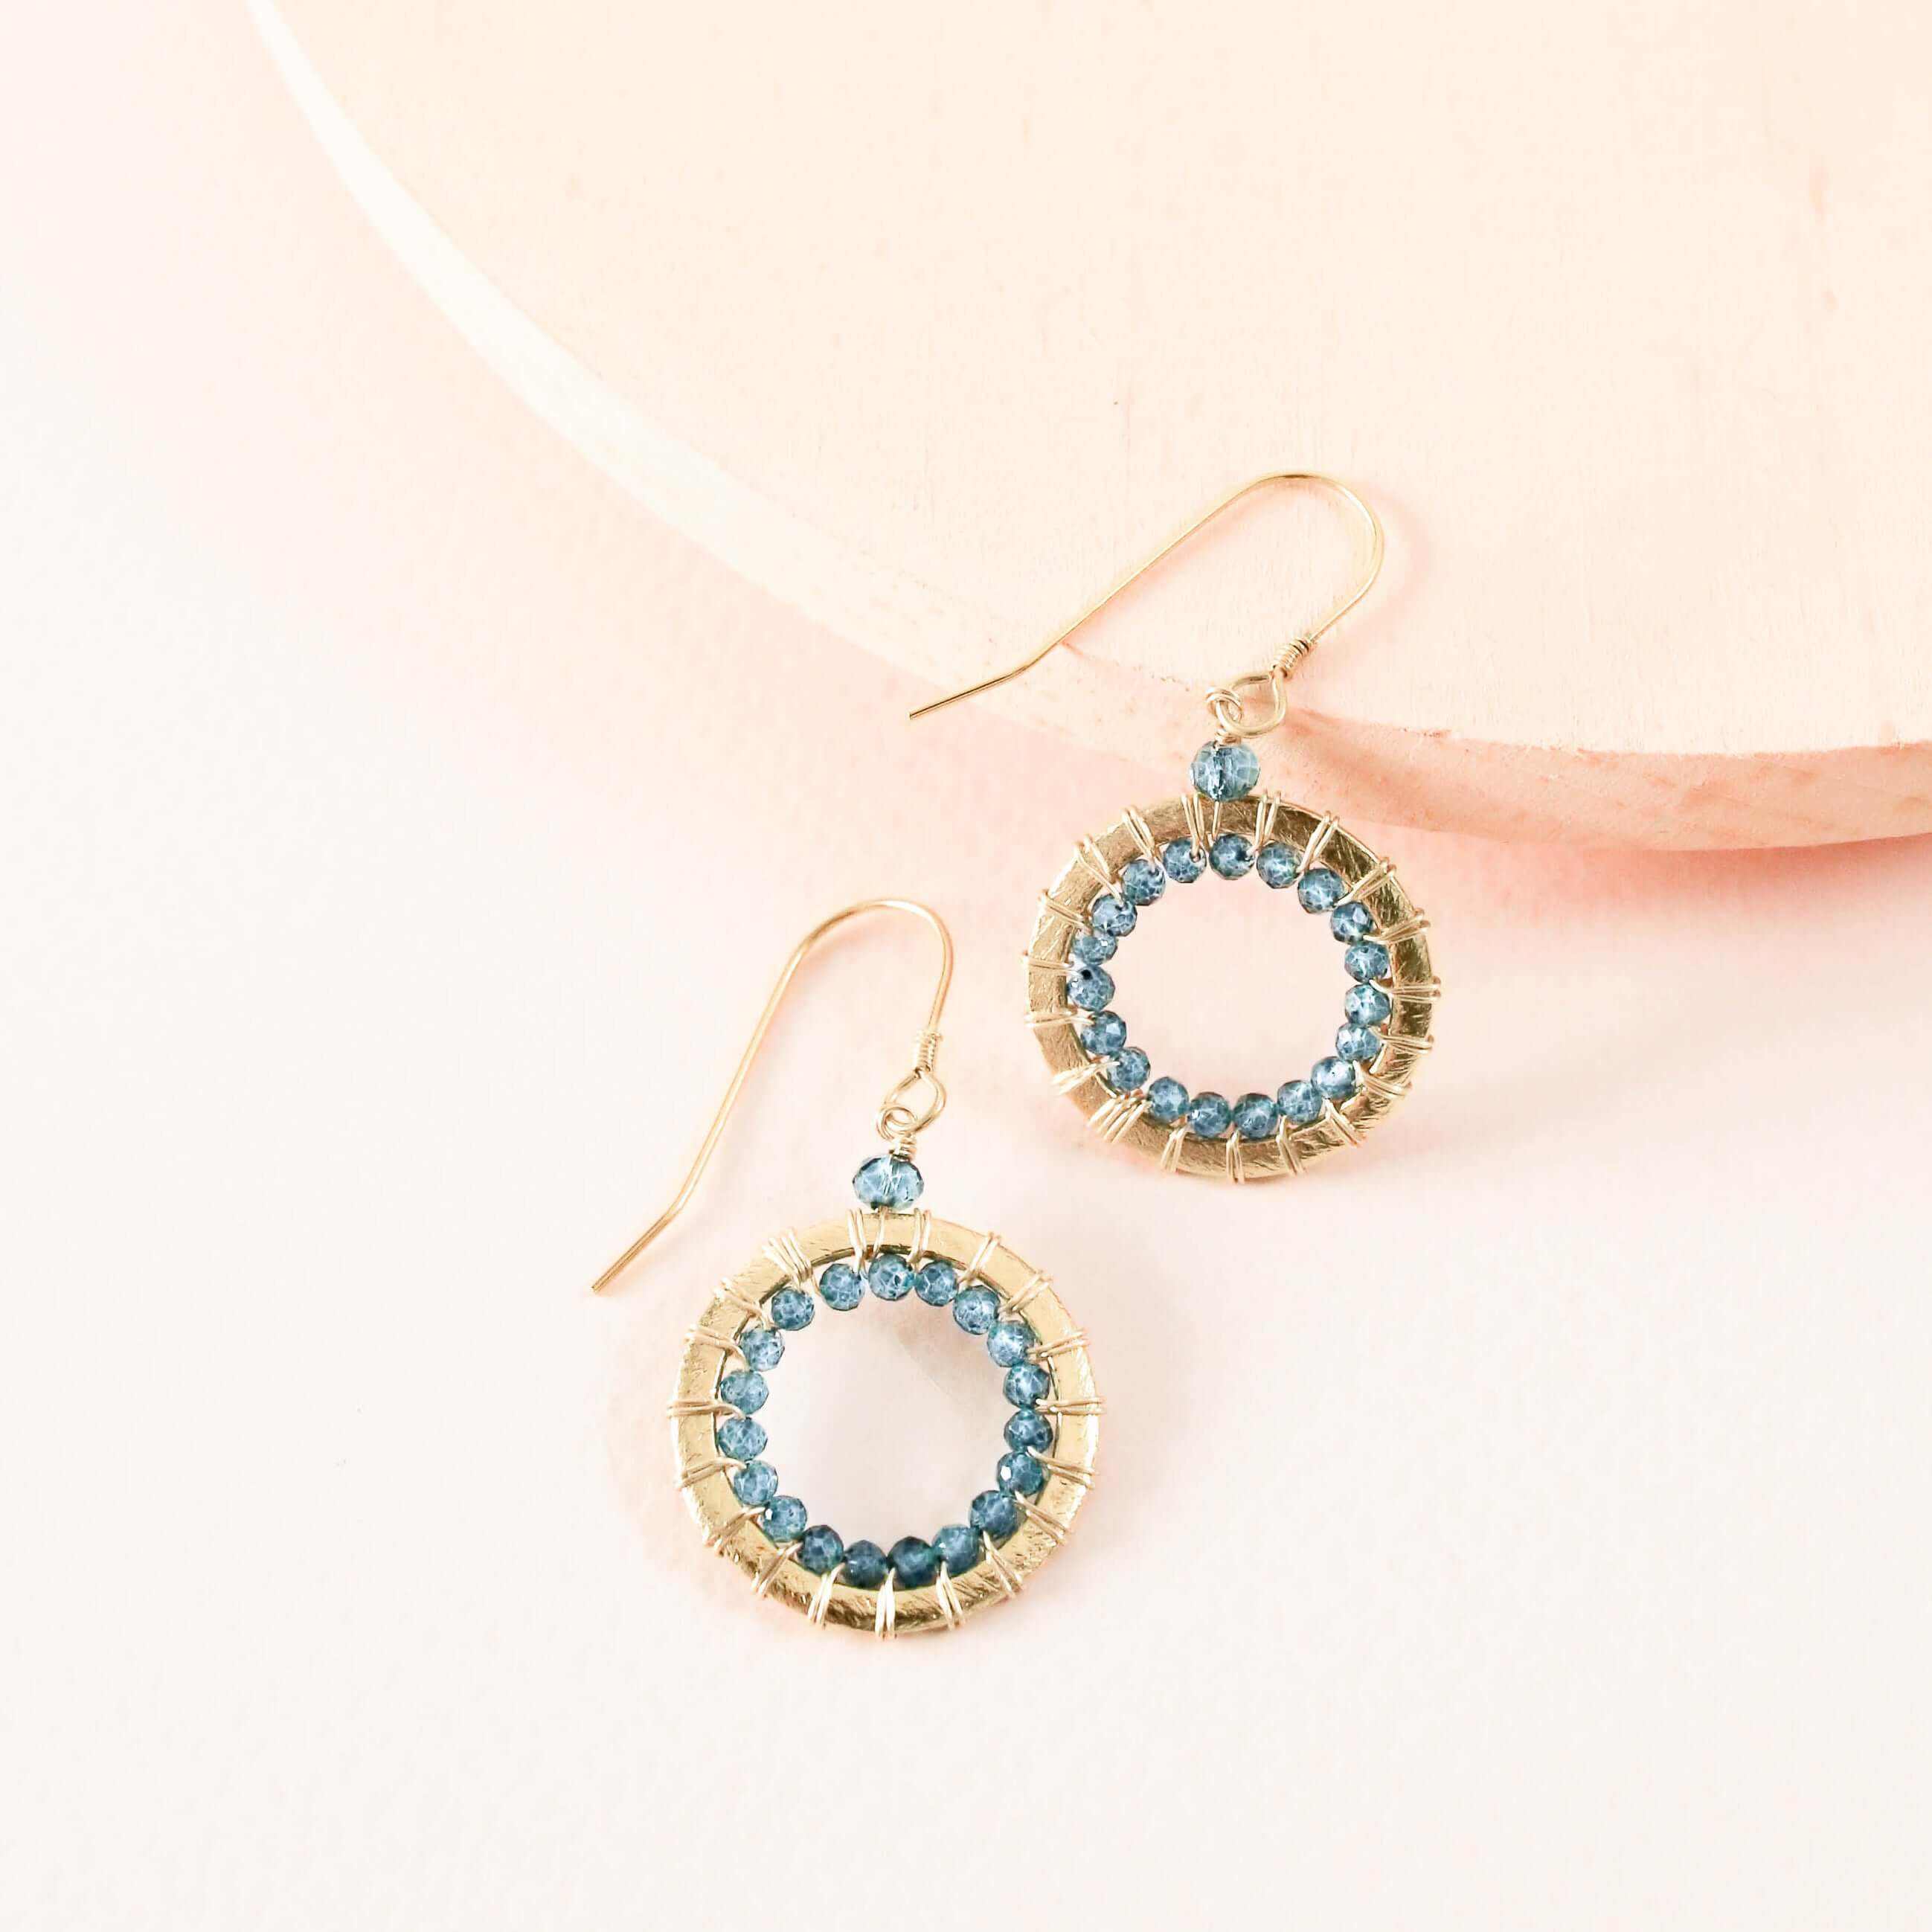 French hook London Blue Quartz dangle earrings